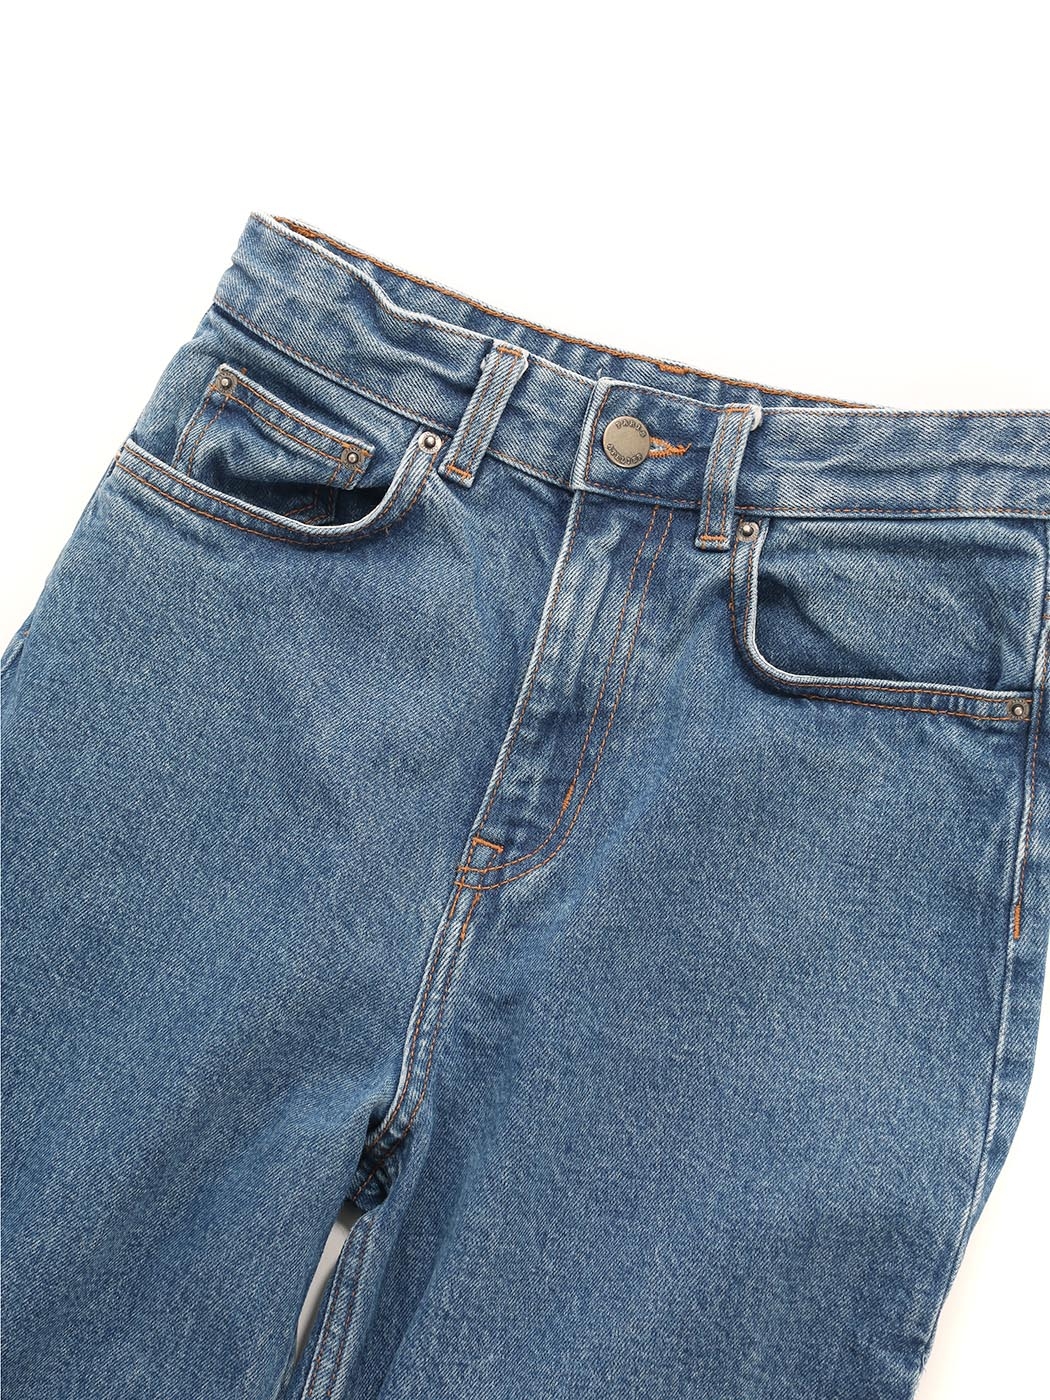 Louise Paris - & OTHER STORIES High waist flared mid blue jeans Size XXS